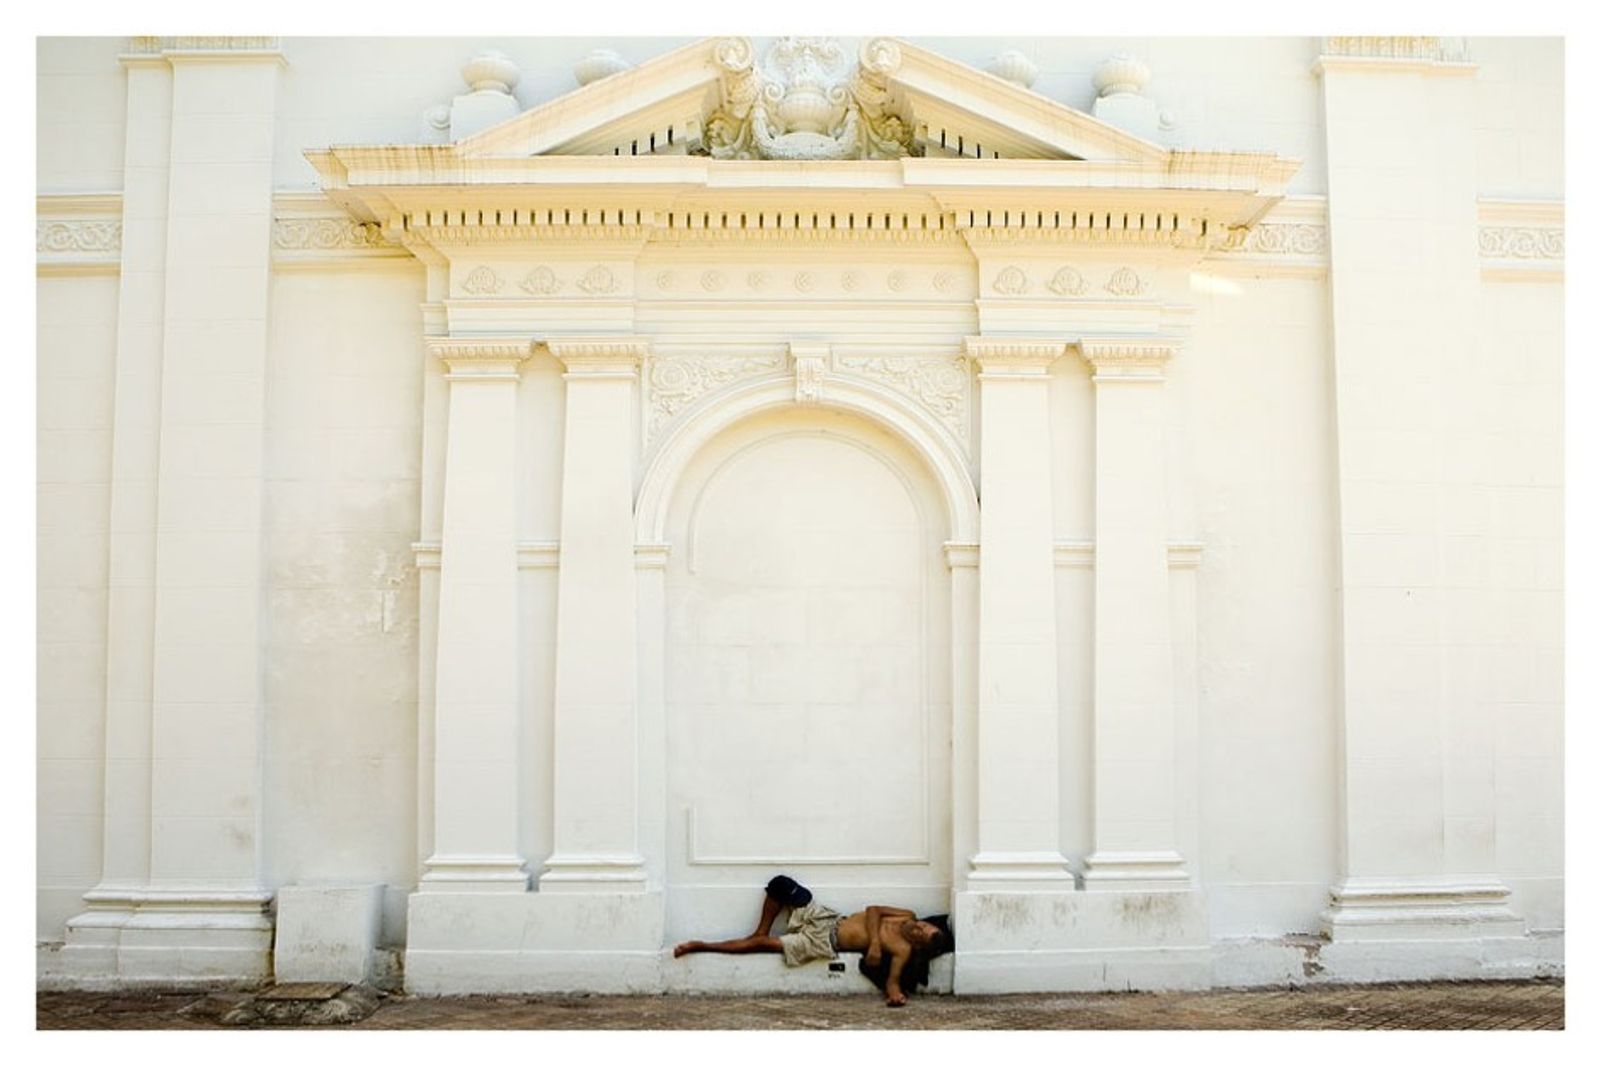 © Jorge Saenz - A homeless man sleeps at Pantheon back wall, Asuncion, Paraguay, Feb. 16, 2009.